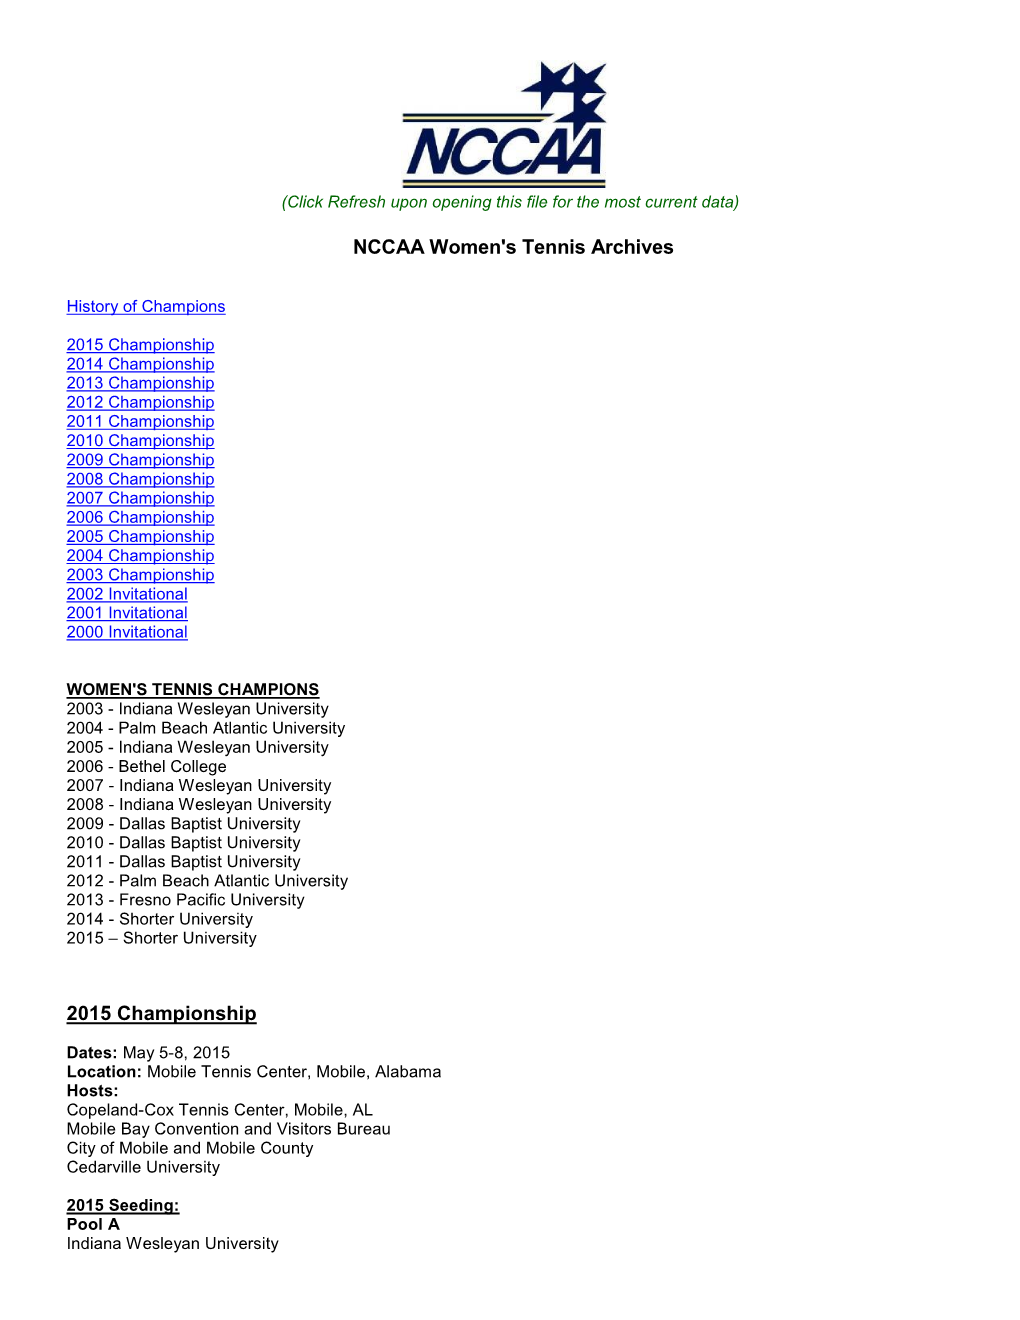 NCCAA Women's Tennis Archives 2015 Championship